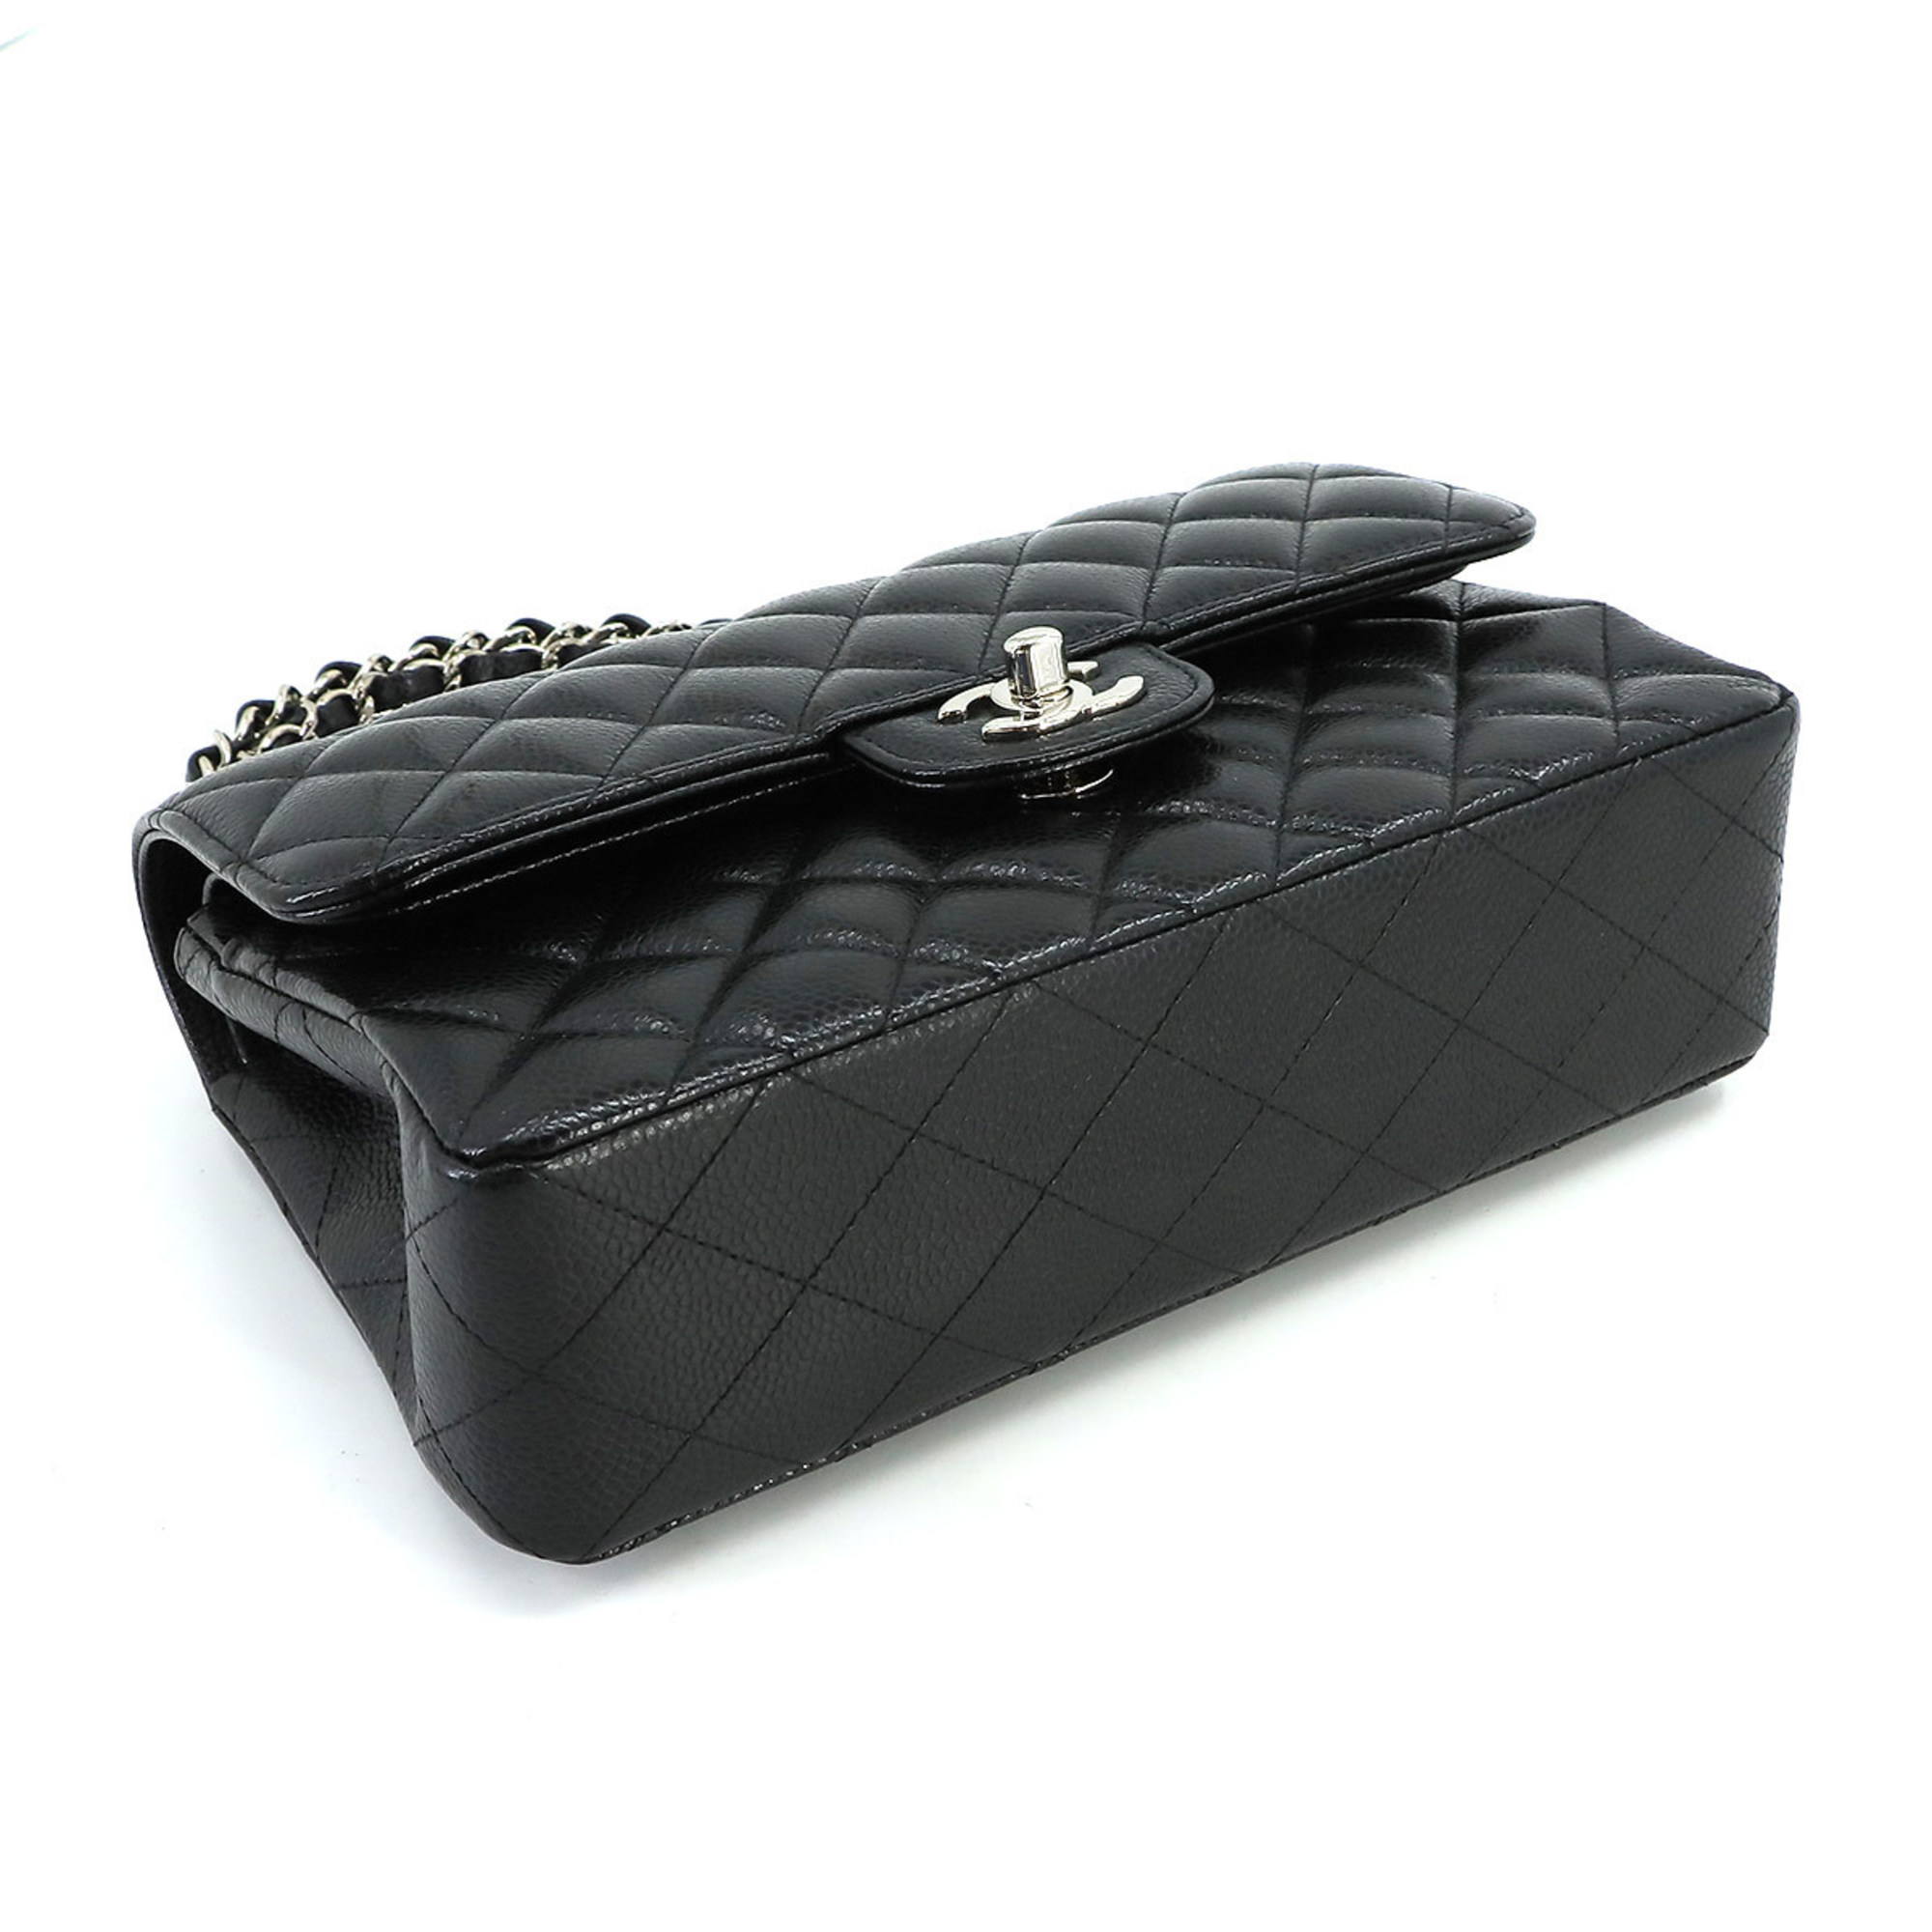 CHANEL Matelasse 23 Chain Shoulder Bag Caviar Skin Black A01113 Silver Hardware